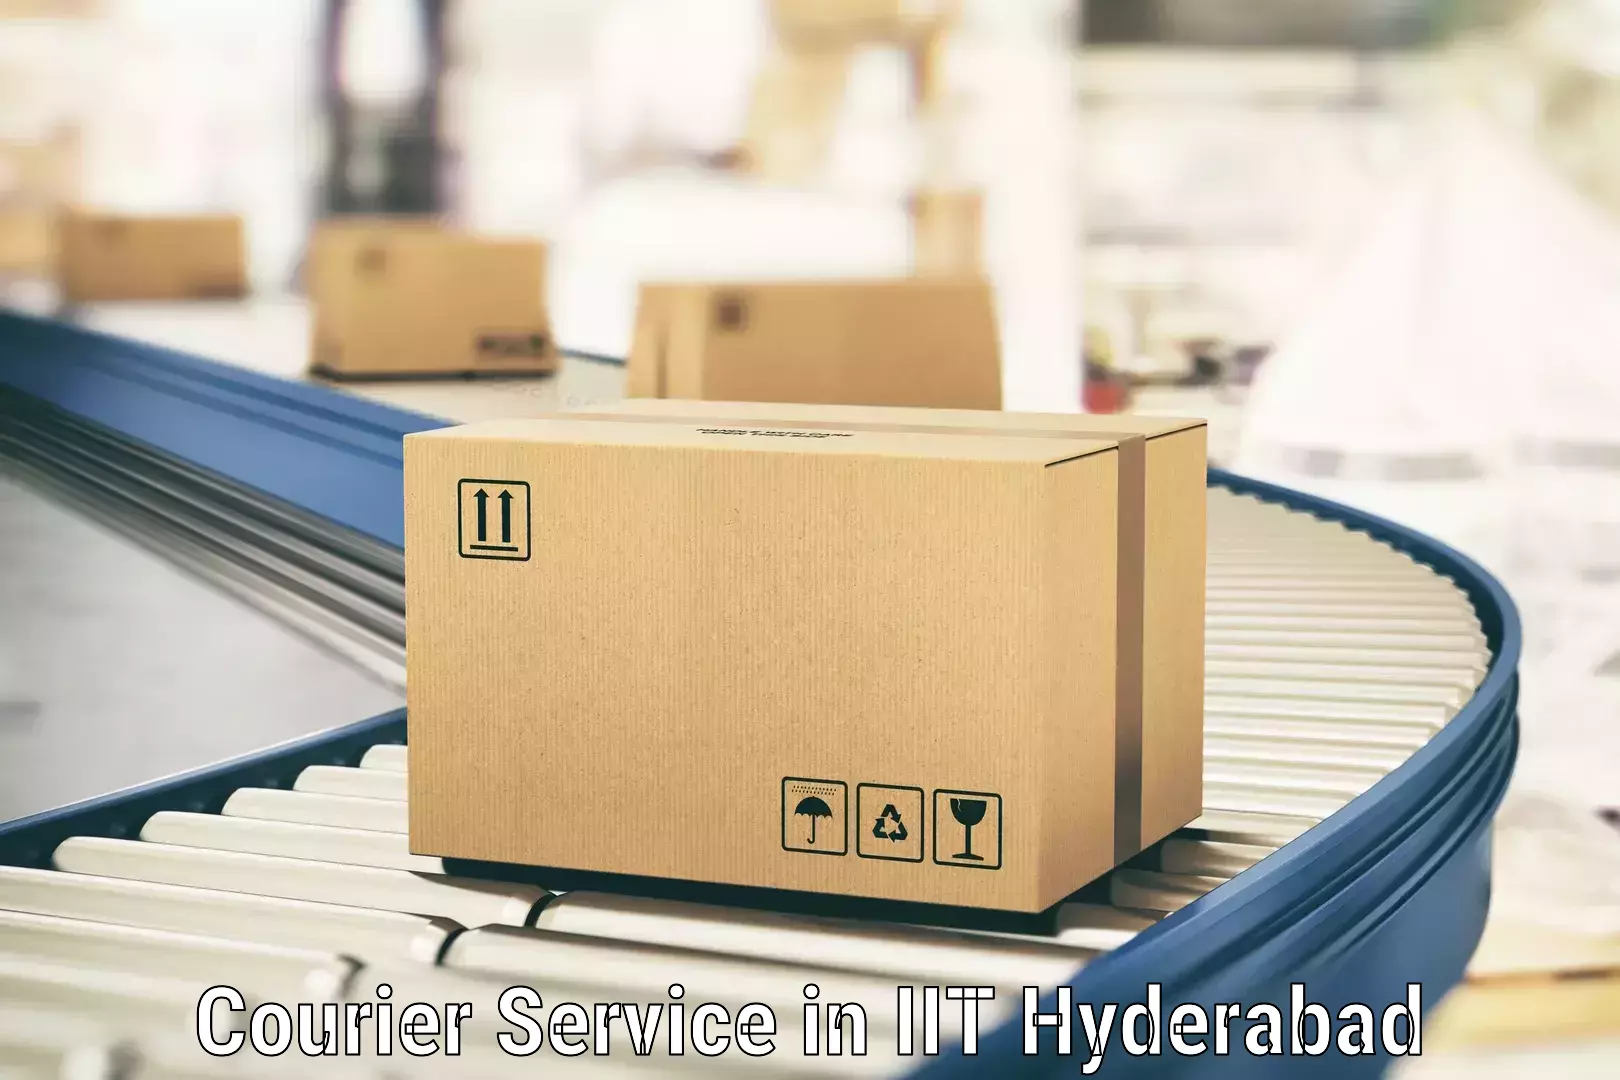 Courier service comparison in IIT Hyderabad